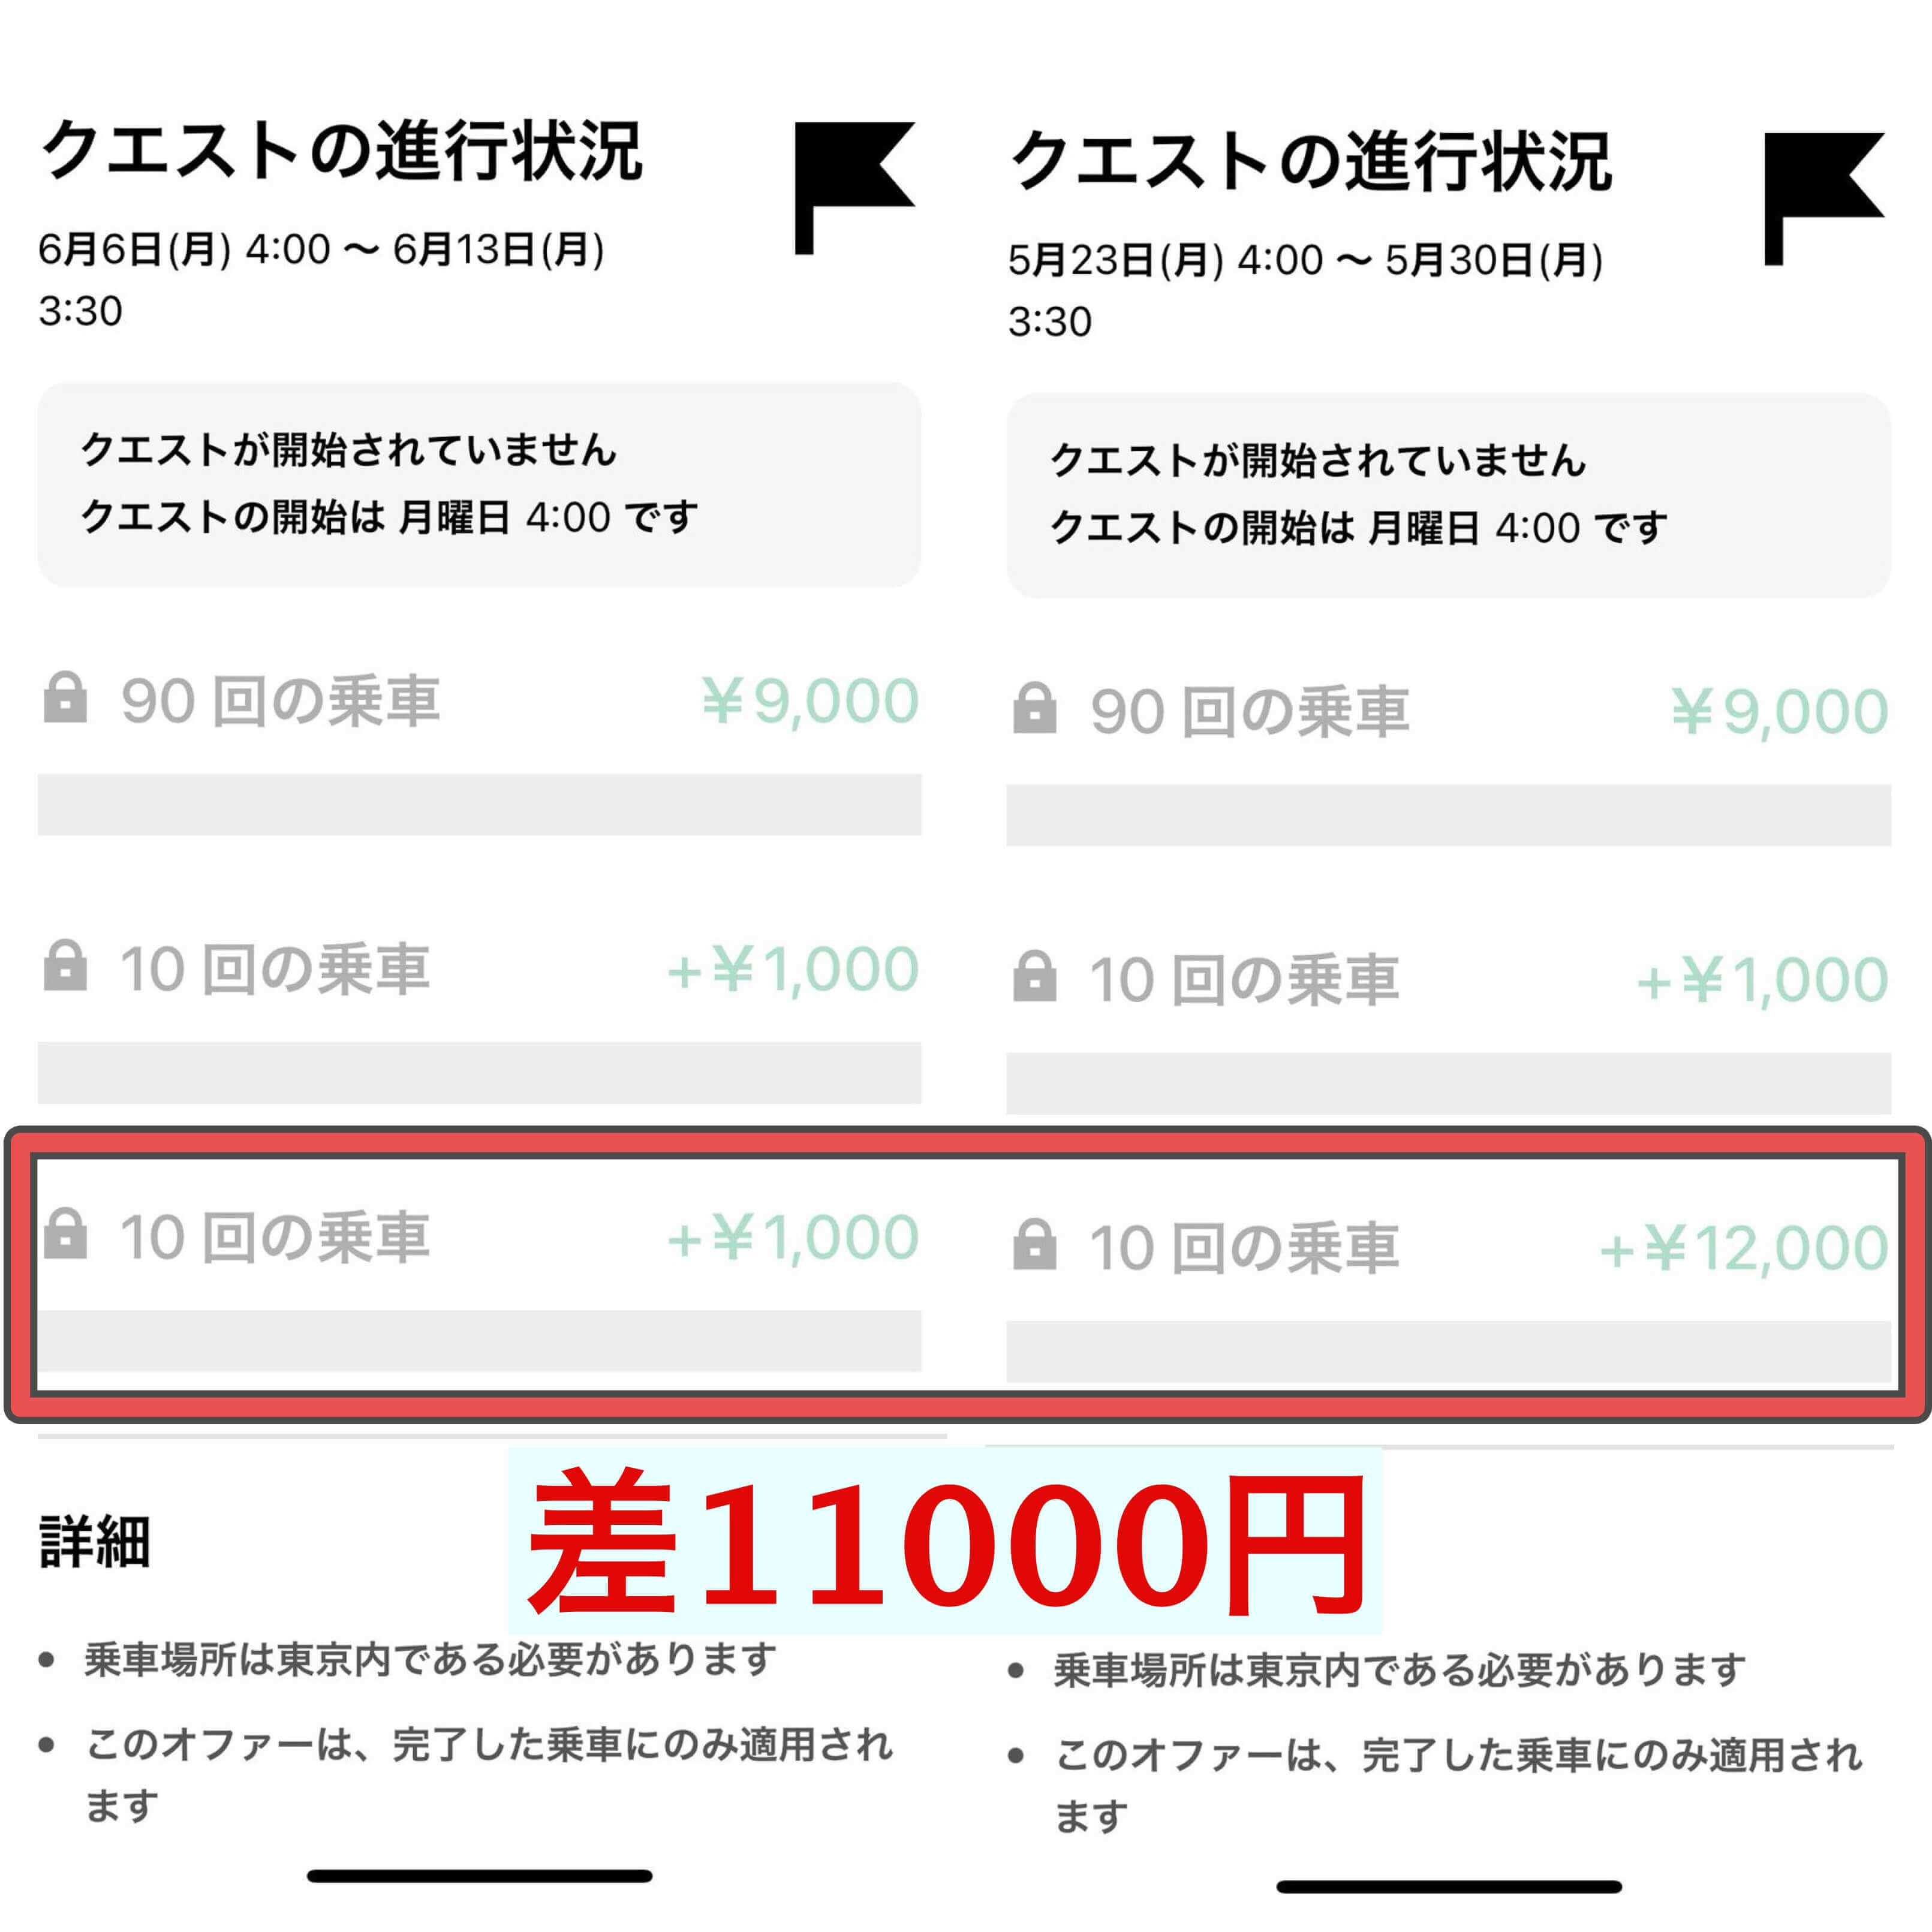 Uber Eats 100回クエスト